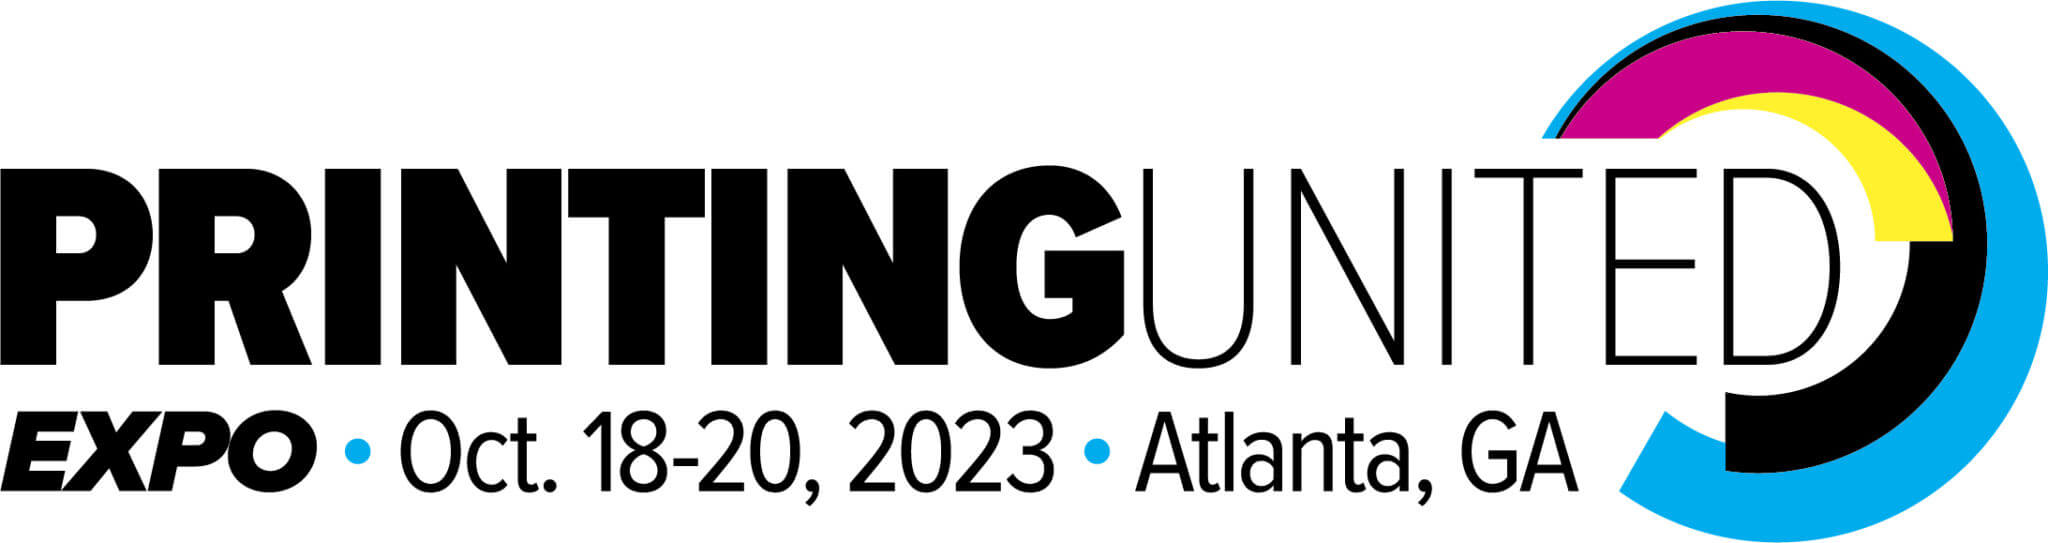 PRINTING-United-Expo-2023-logo